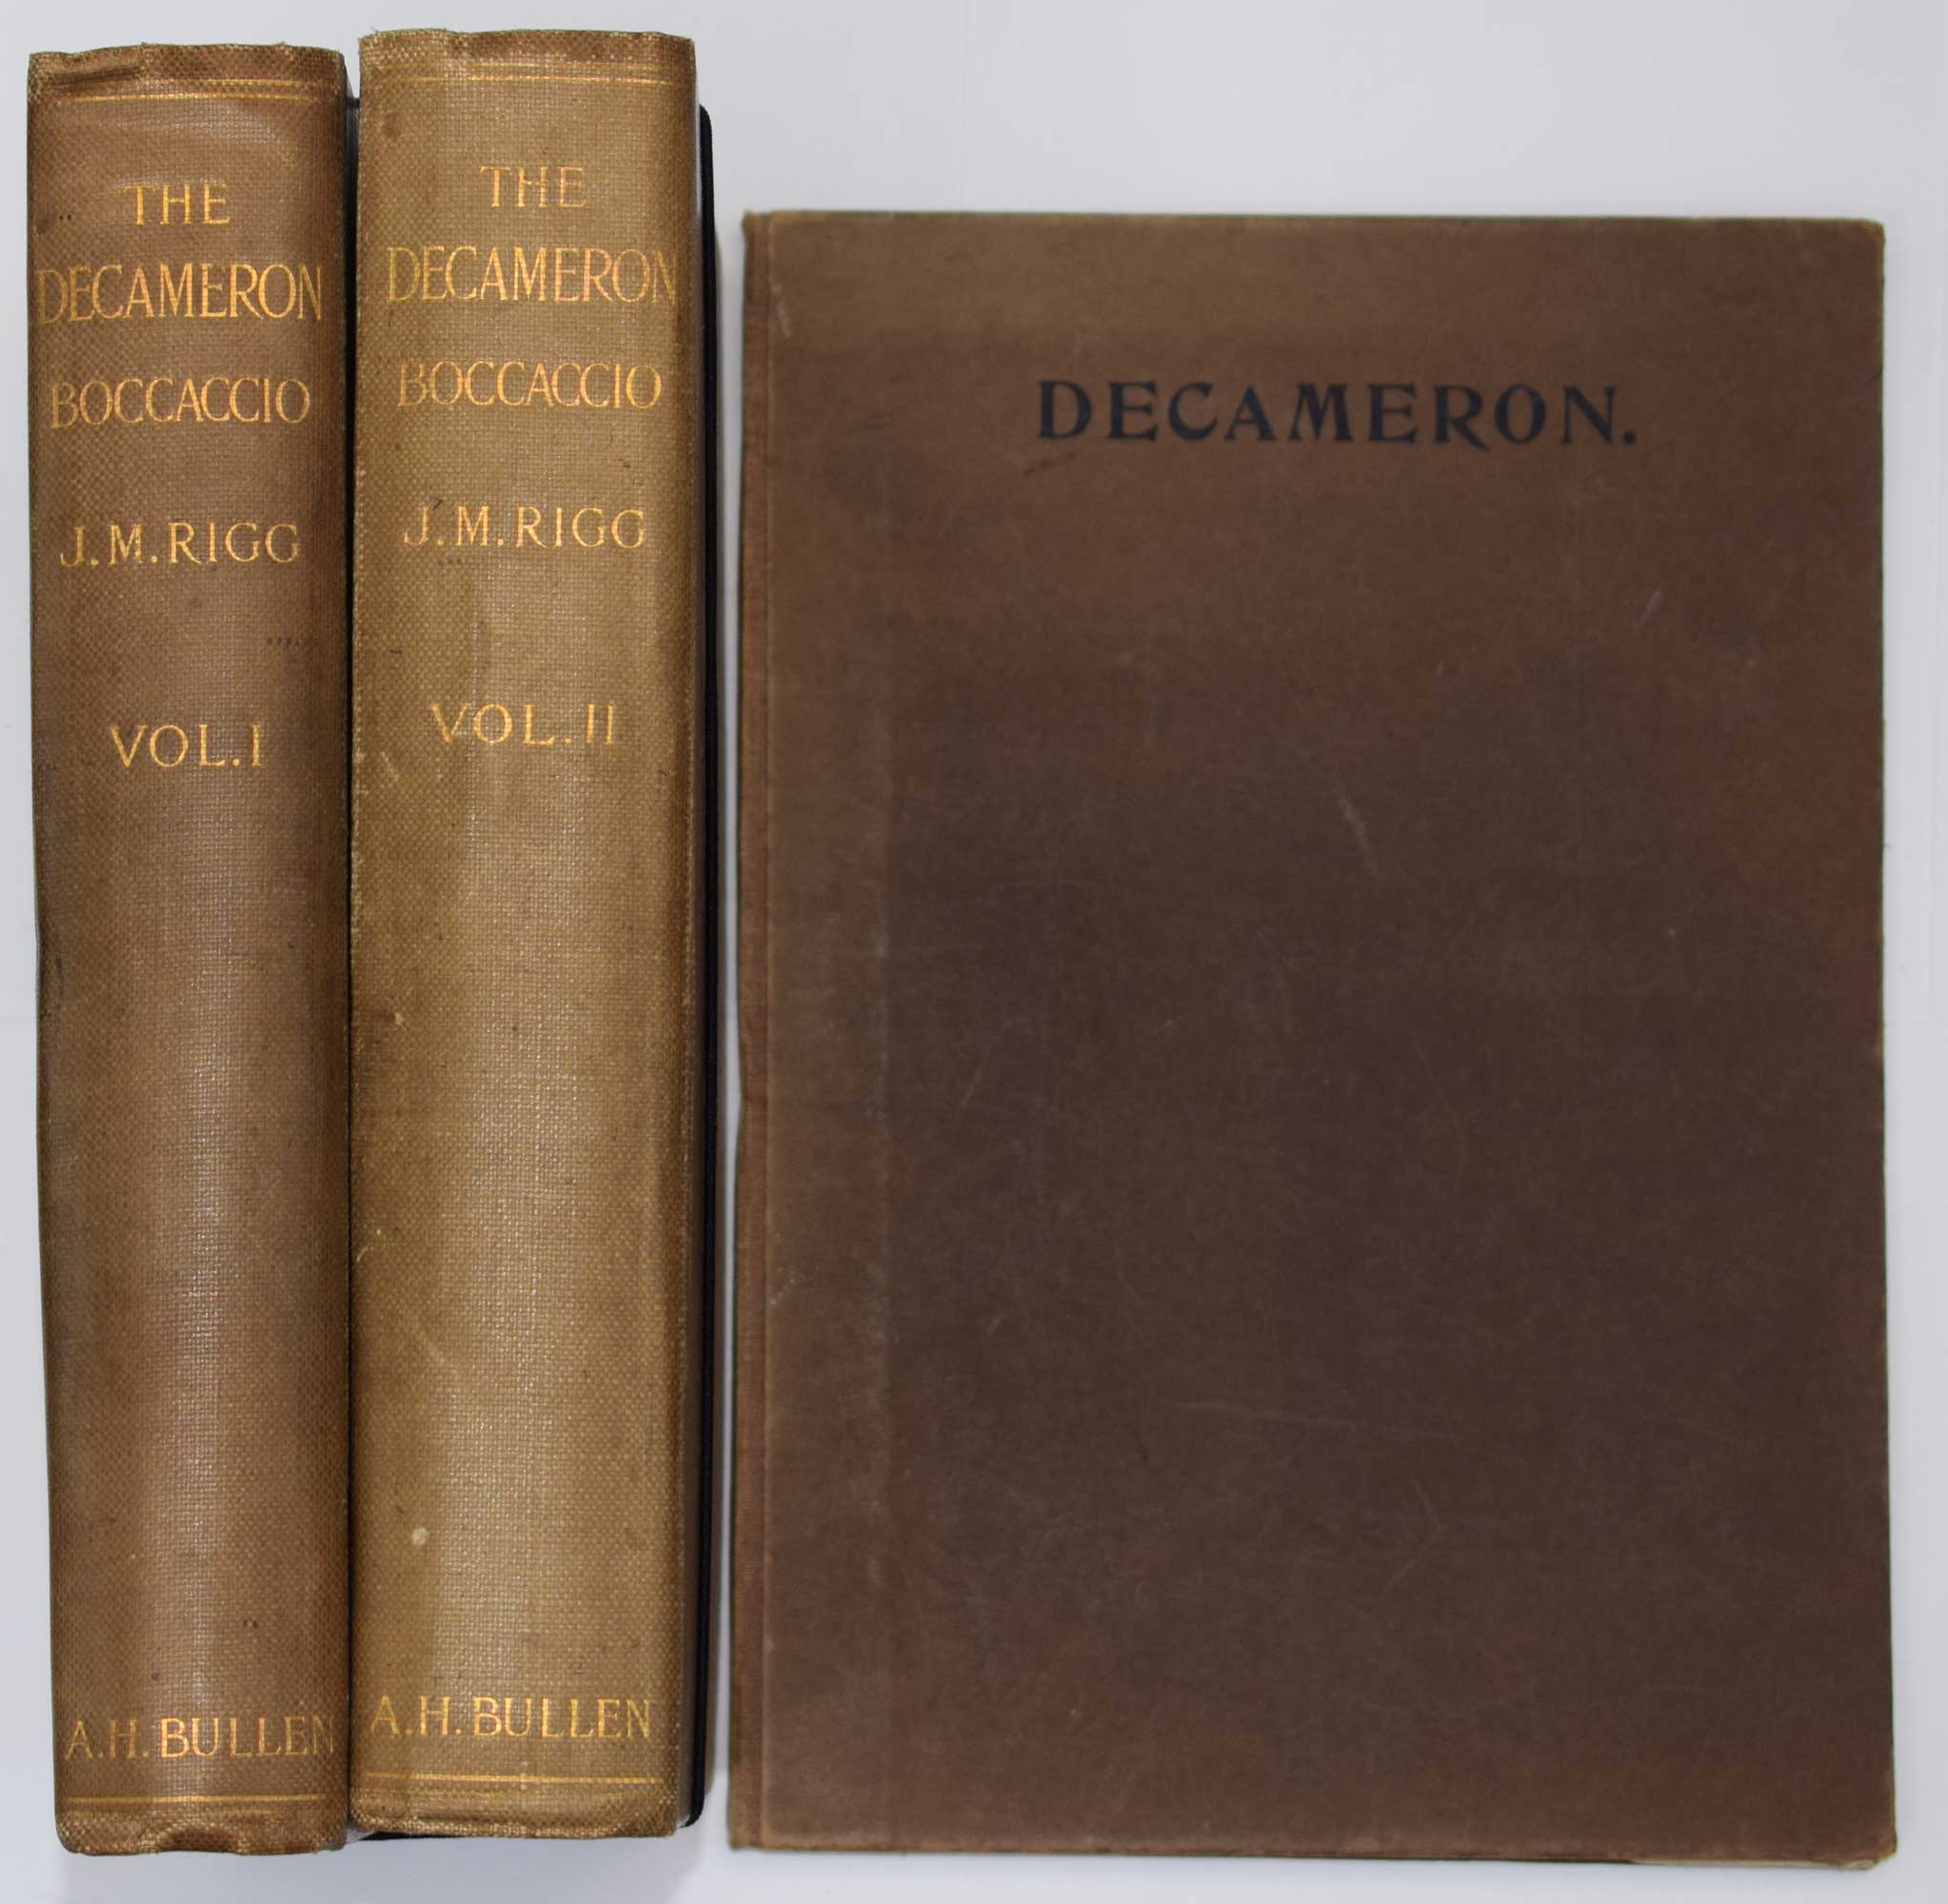 The Decameron. Bullen edition. 2 volume set plus Portfolio with 8 extra plates.